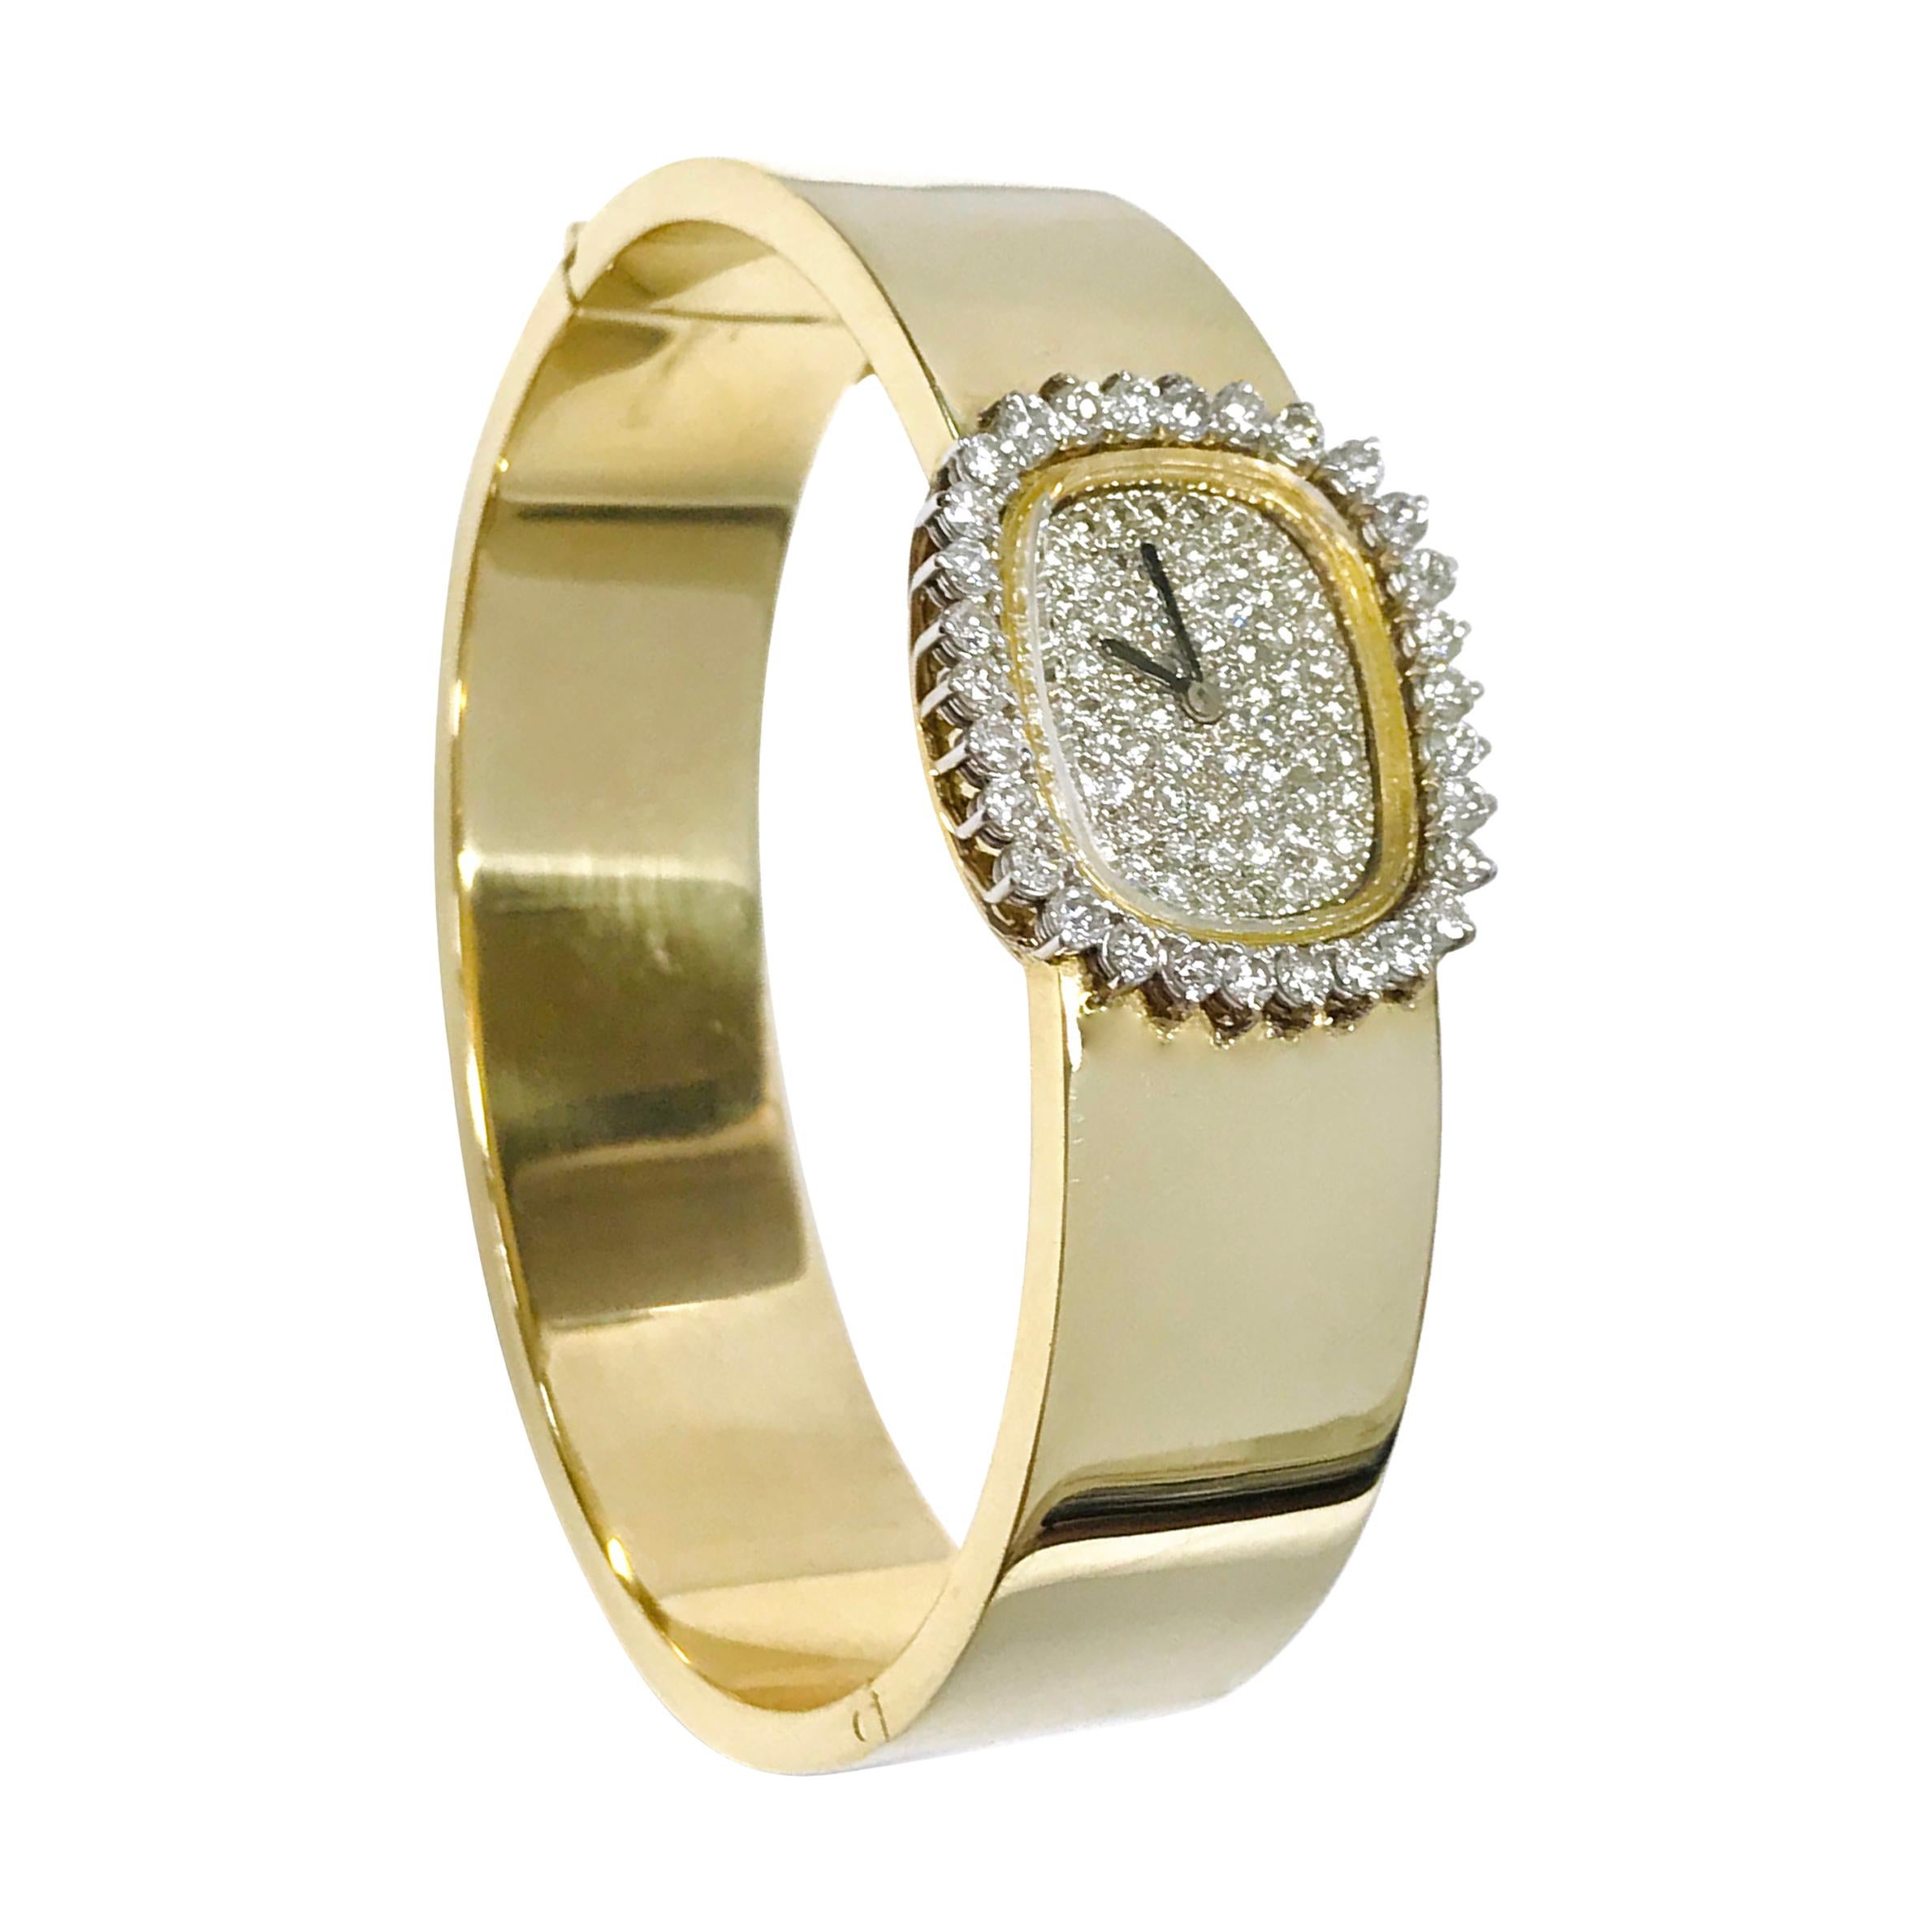 Omega Ladies Yellow Gold Diamond Bangle Watch